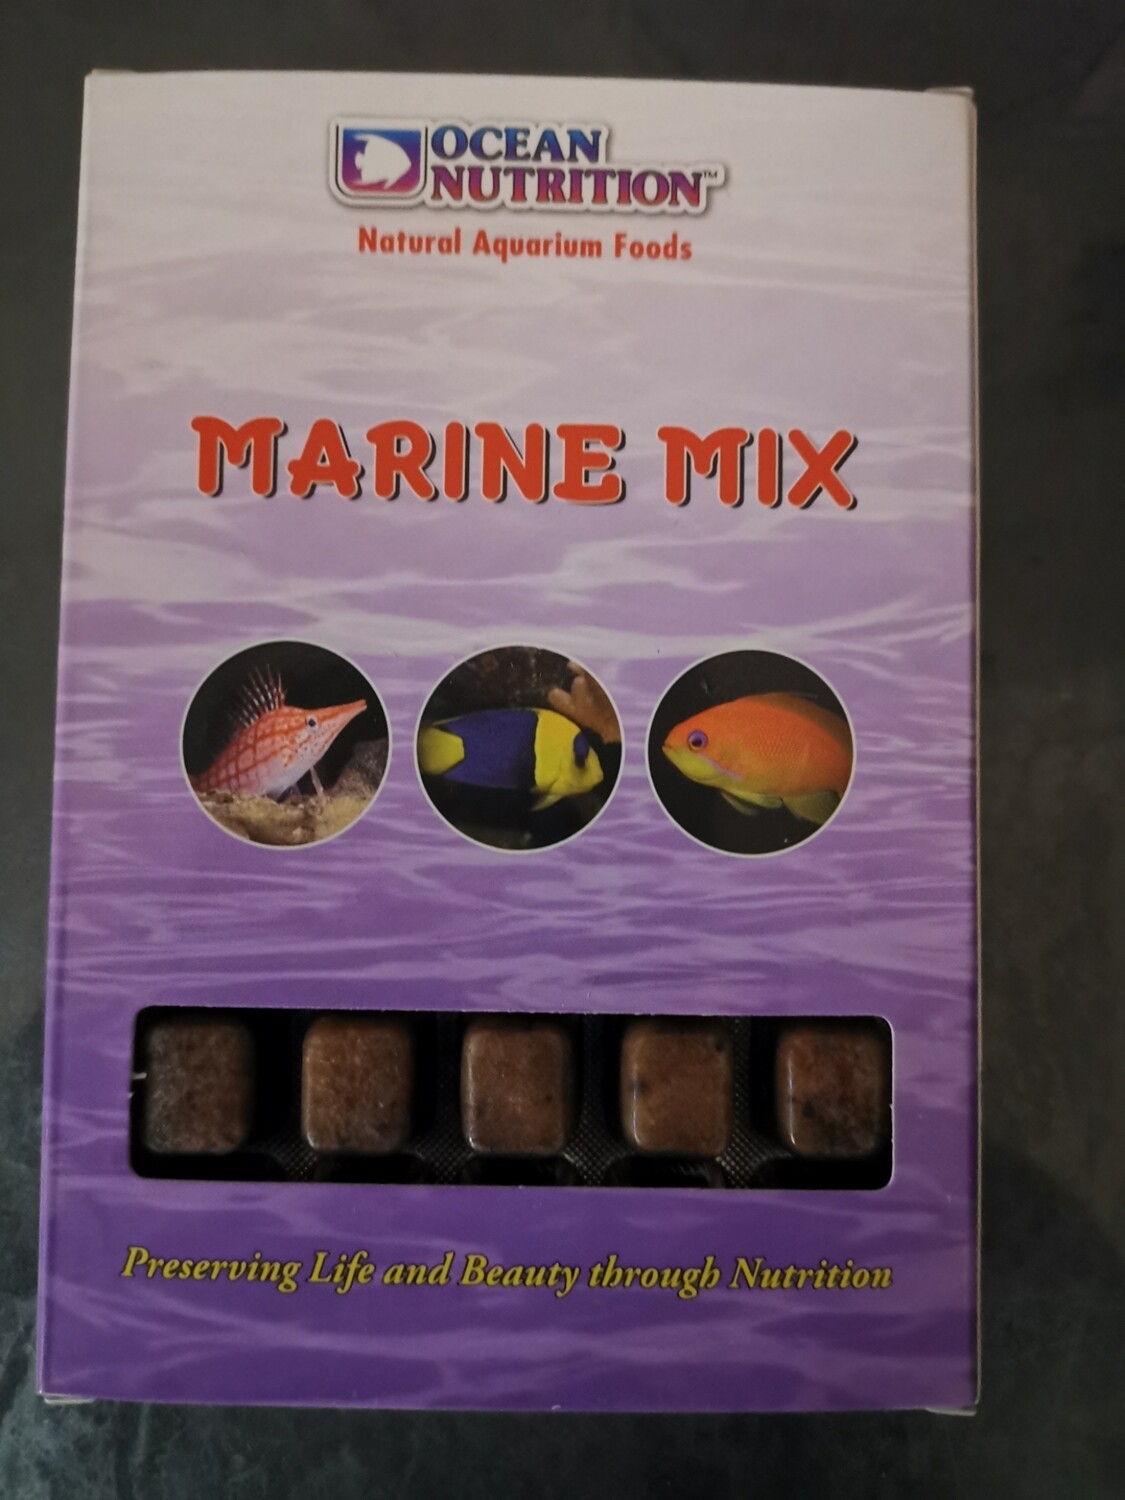 Marine mix